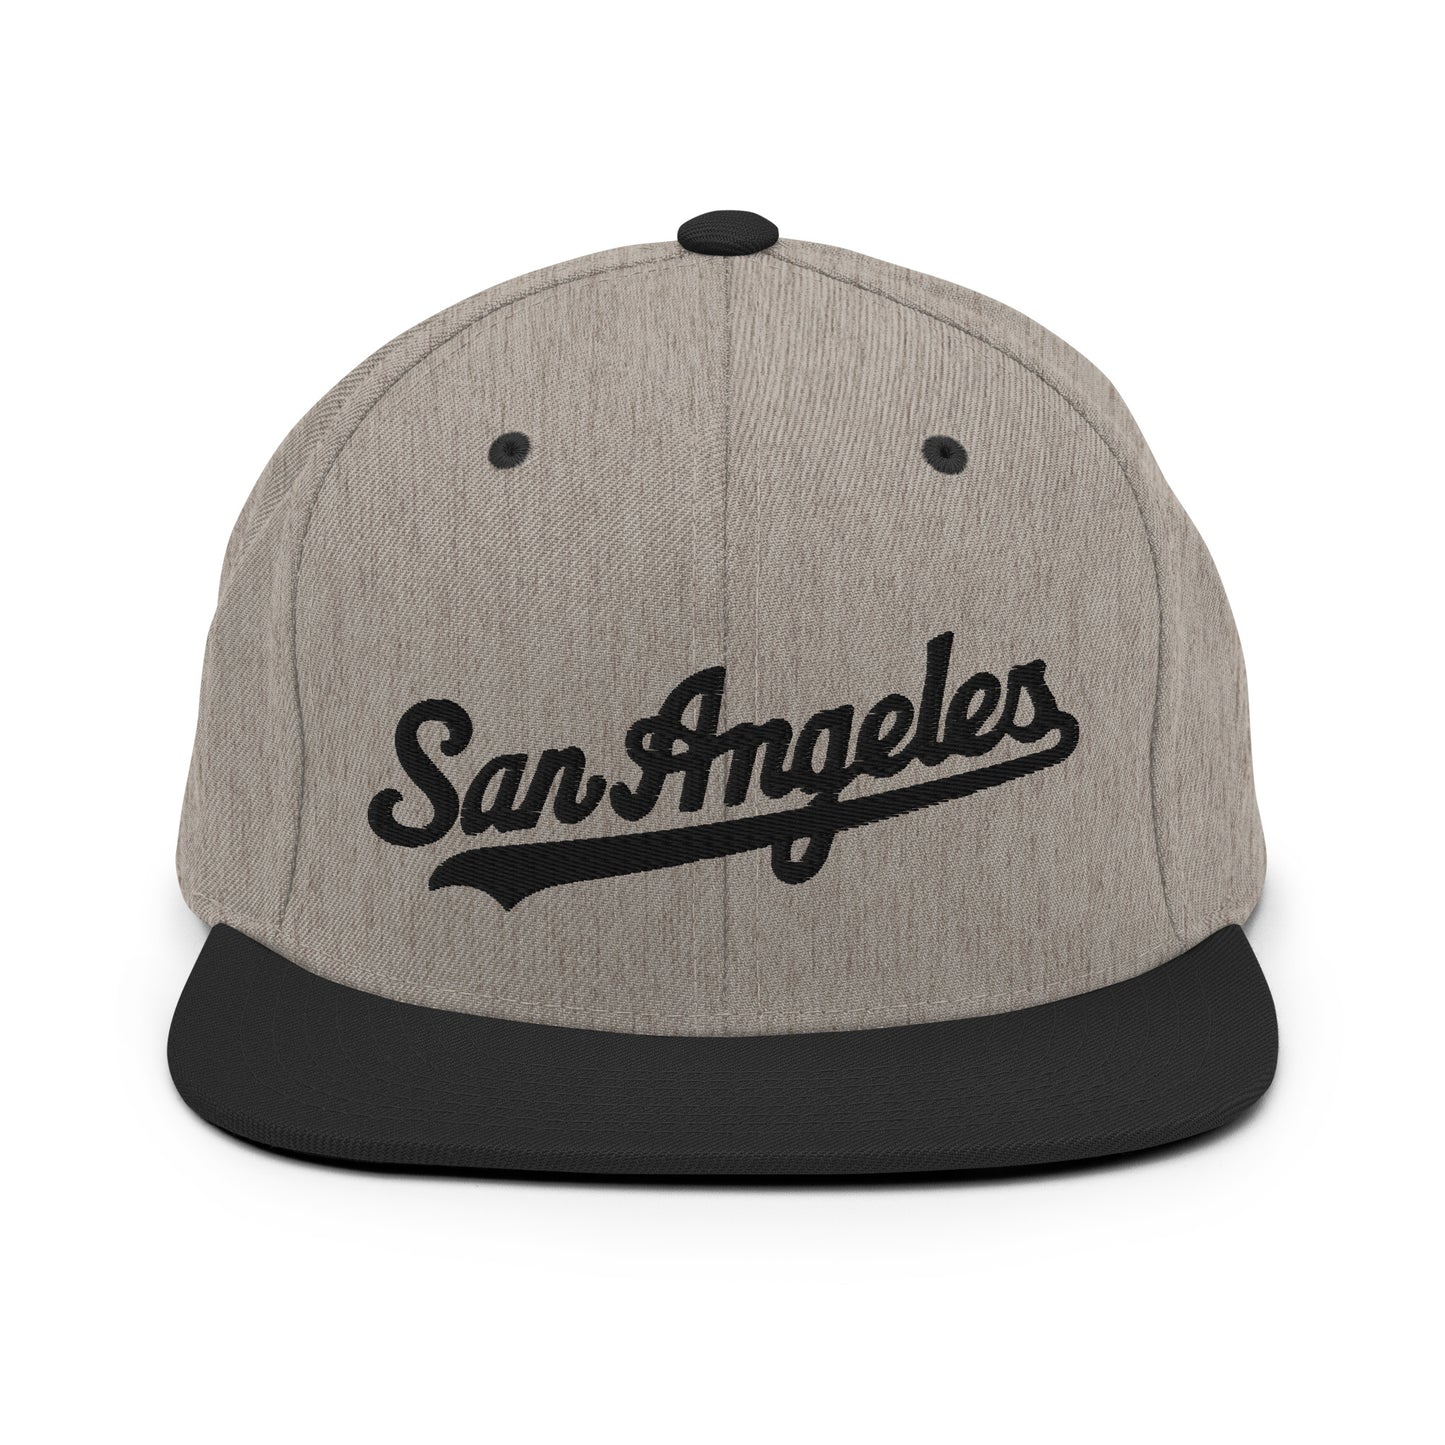 San Angeles Home Team snapback hat